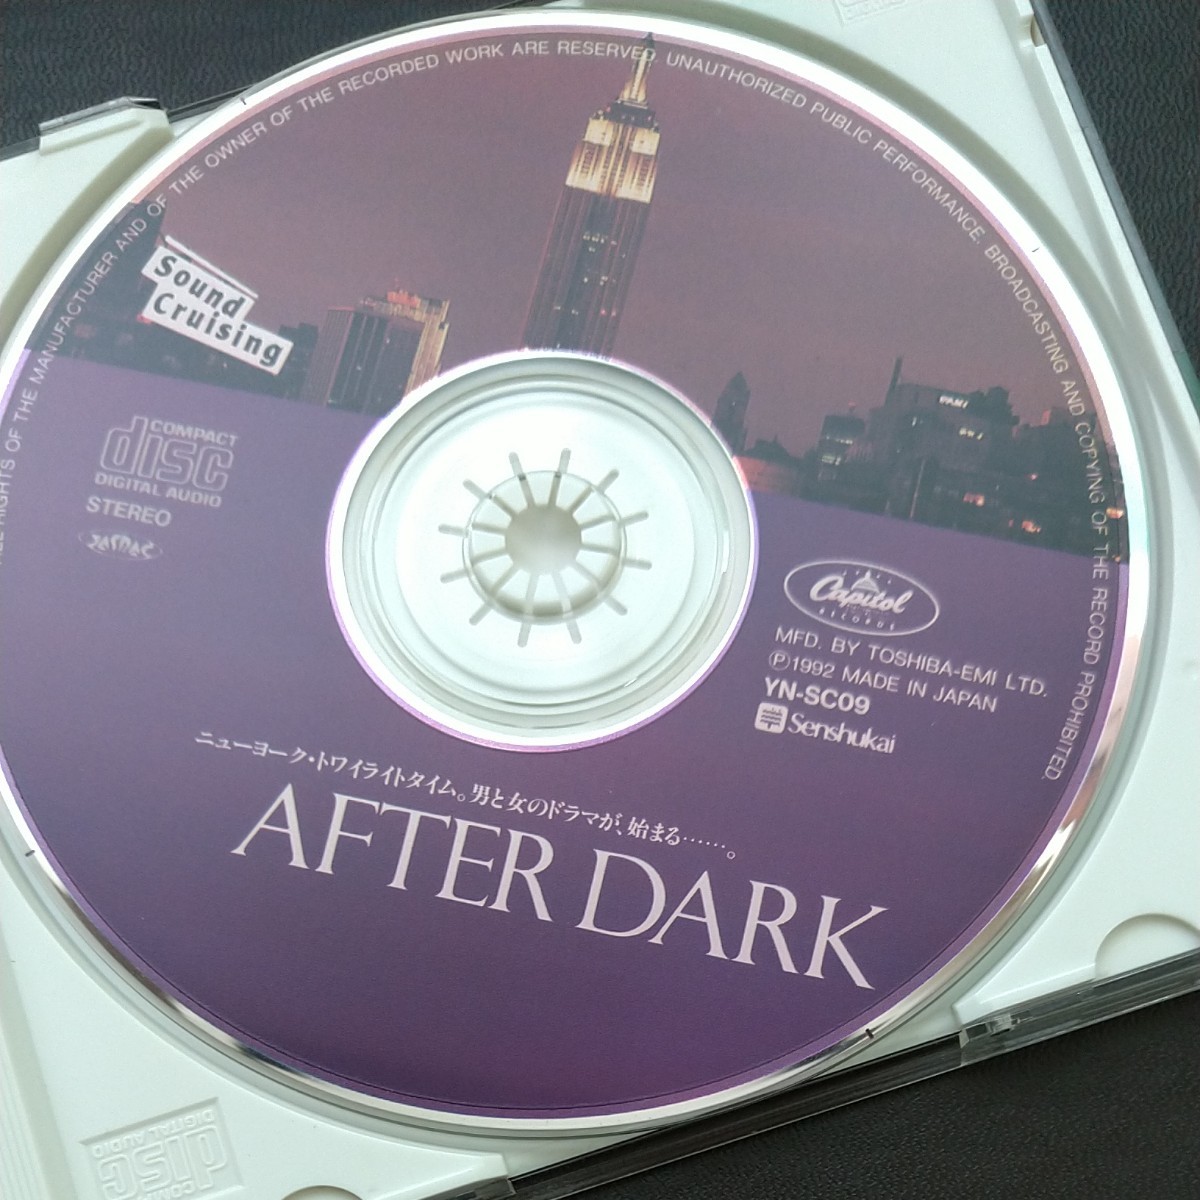 After Dark CD